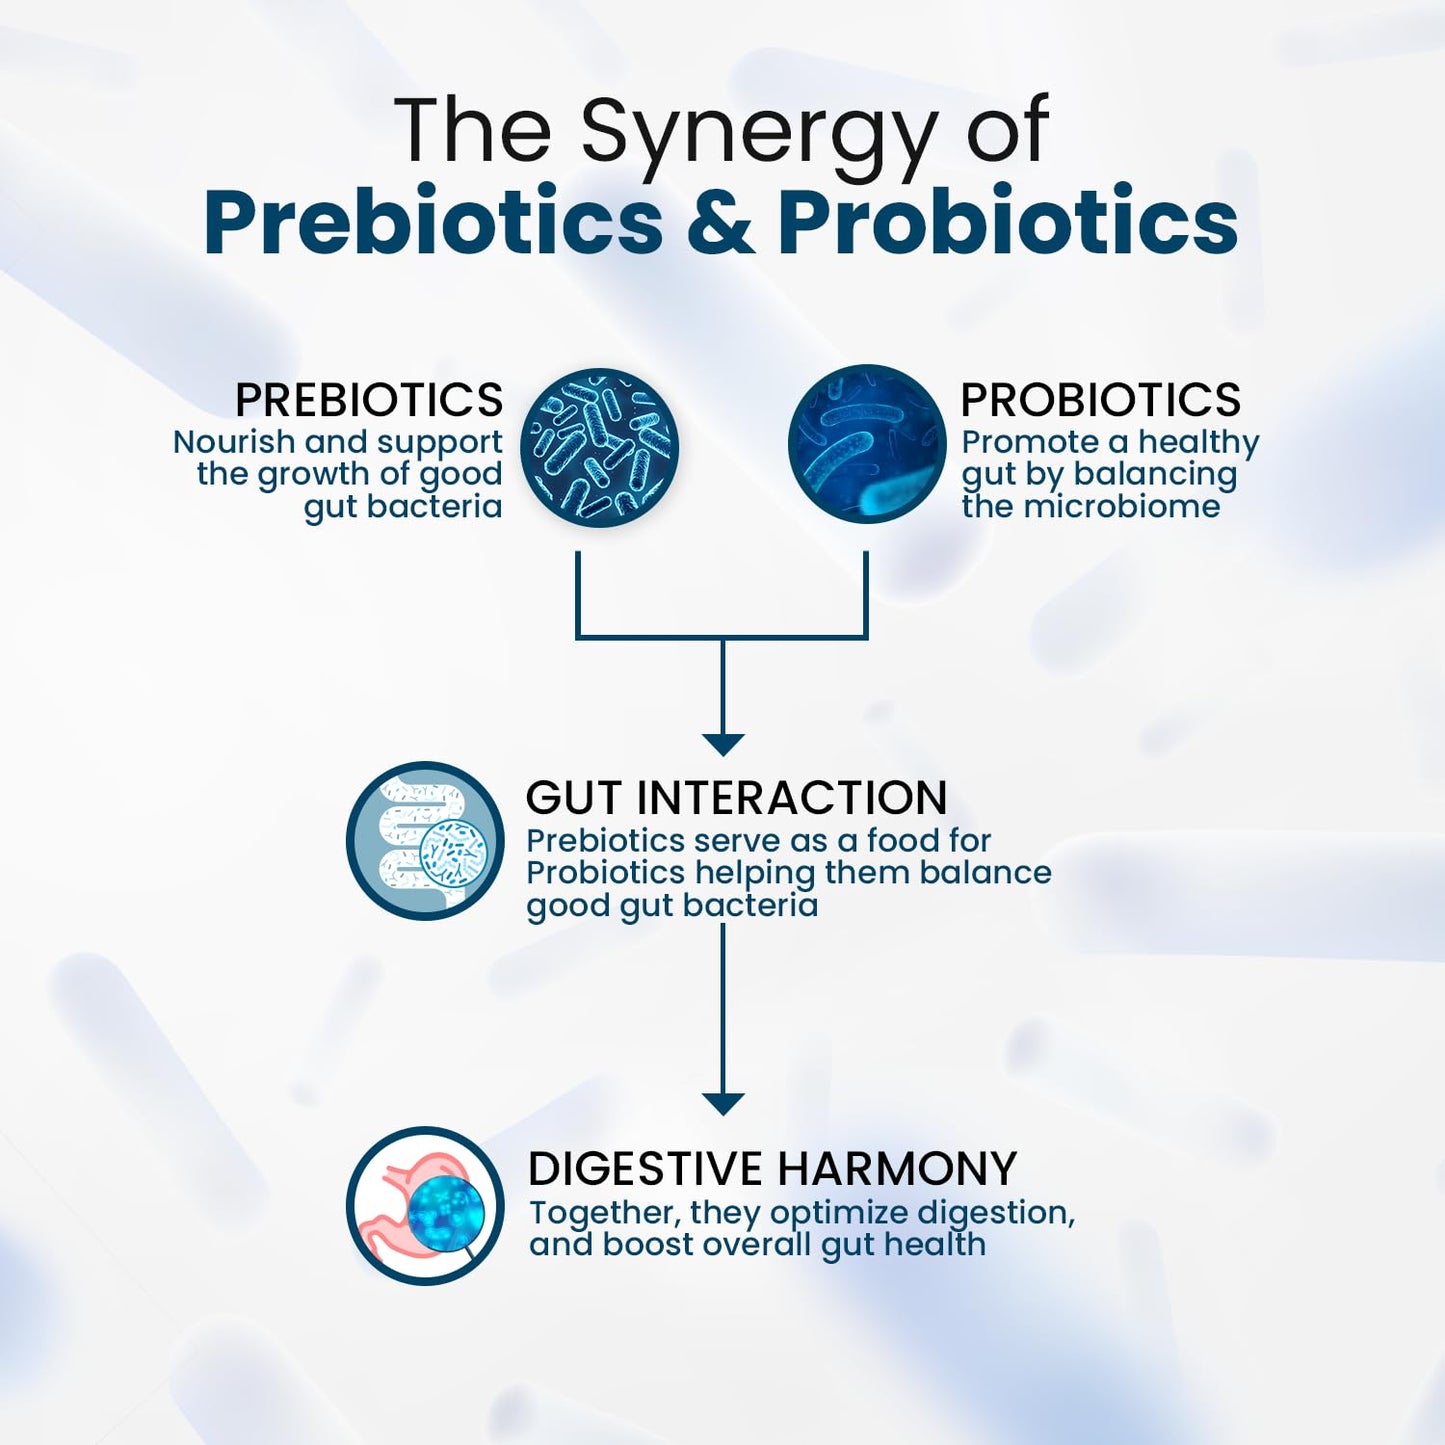 Himalayan Organics Probiotics Supplement 50 billion CFU with Prebiotics 150mg for Digestion, Gut Health & Immunity - 60 Veg Capsules